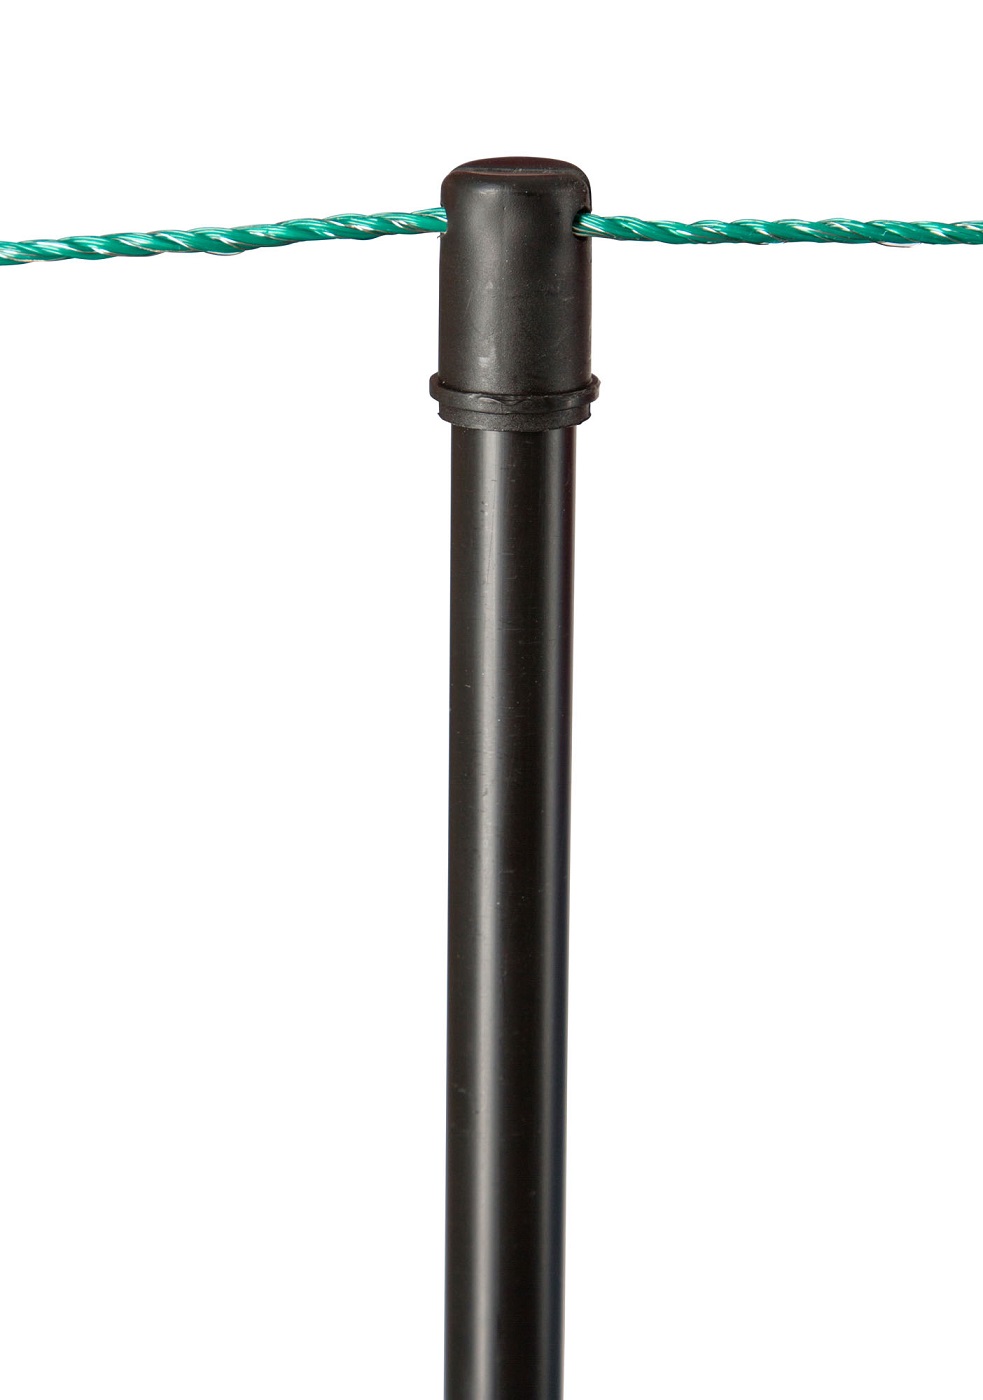 OviNet Schafnetz Doppelspitze 108 cm - 50 m grün